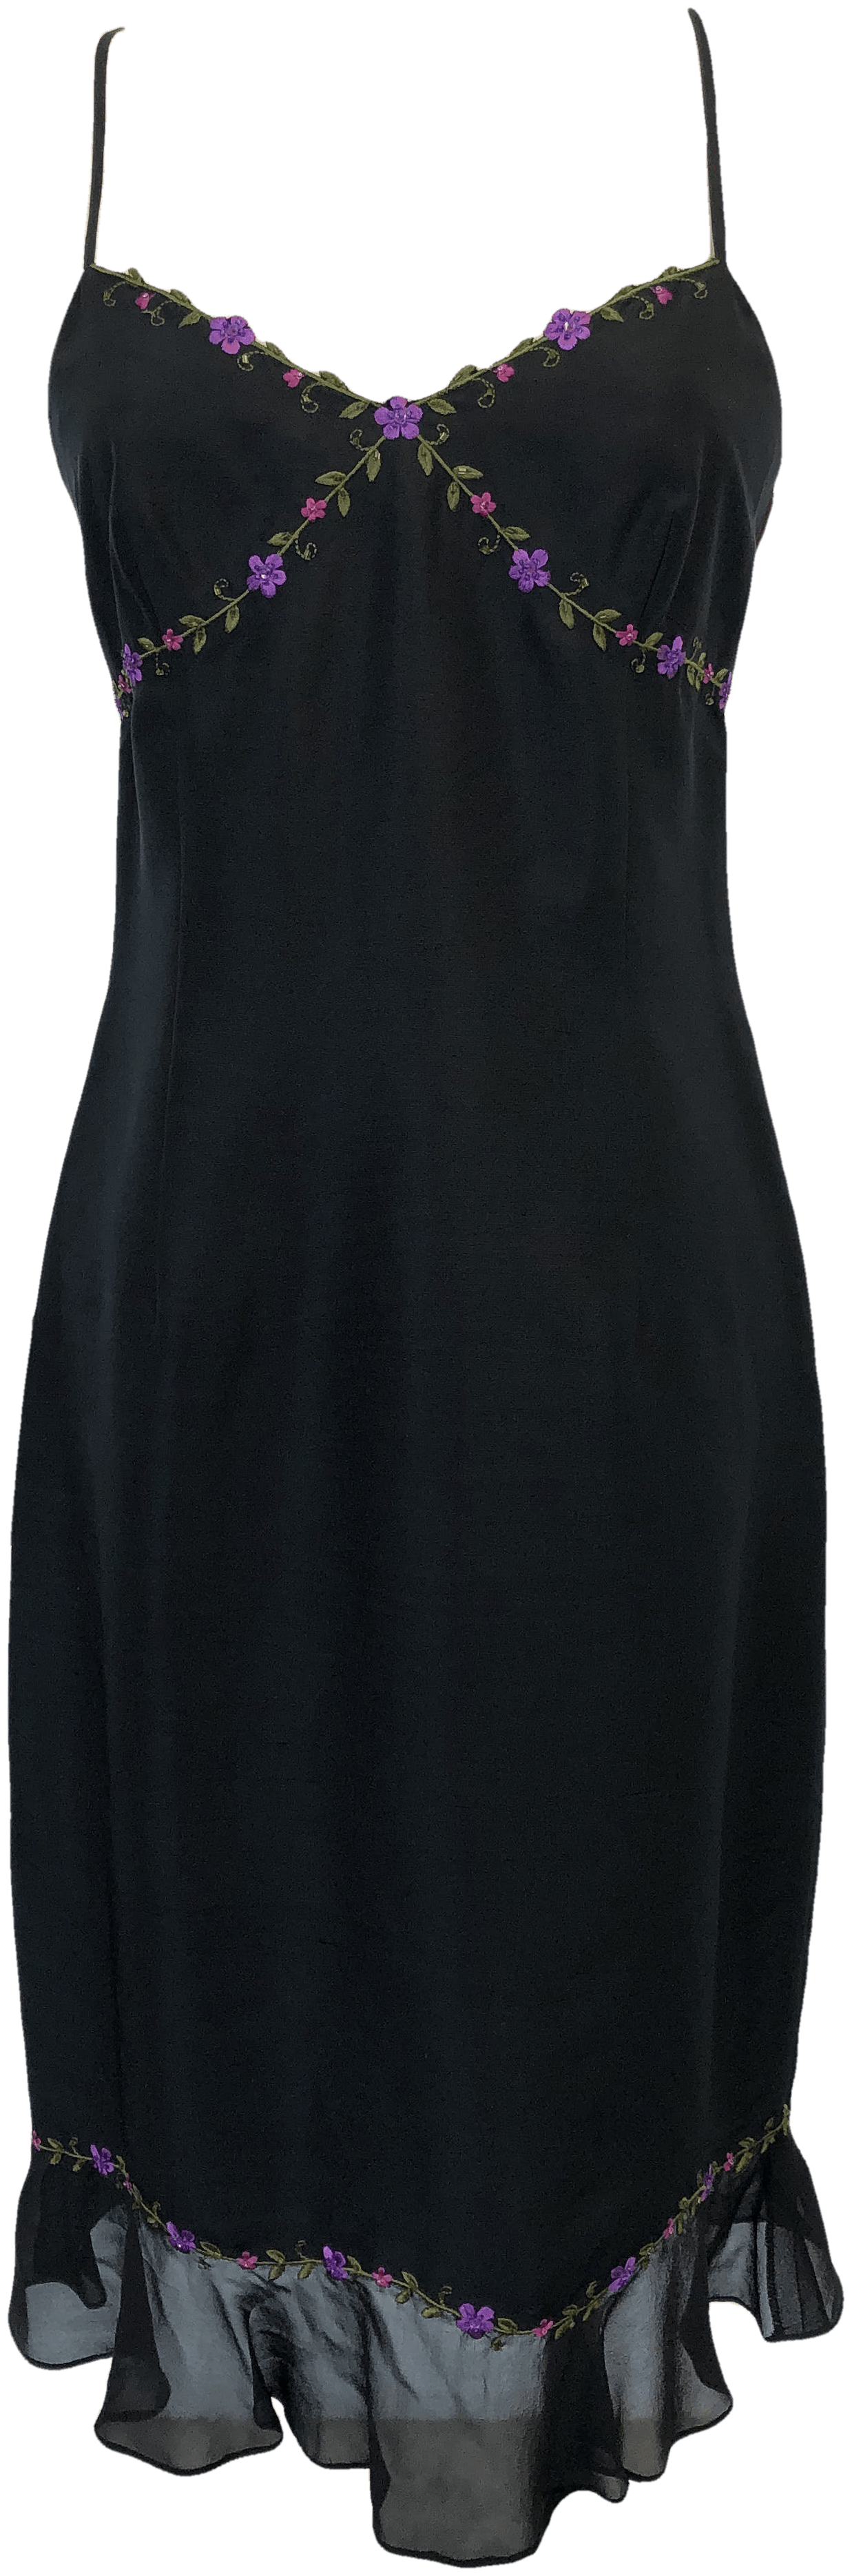 ann taylor black floral dress